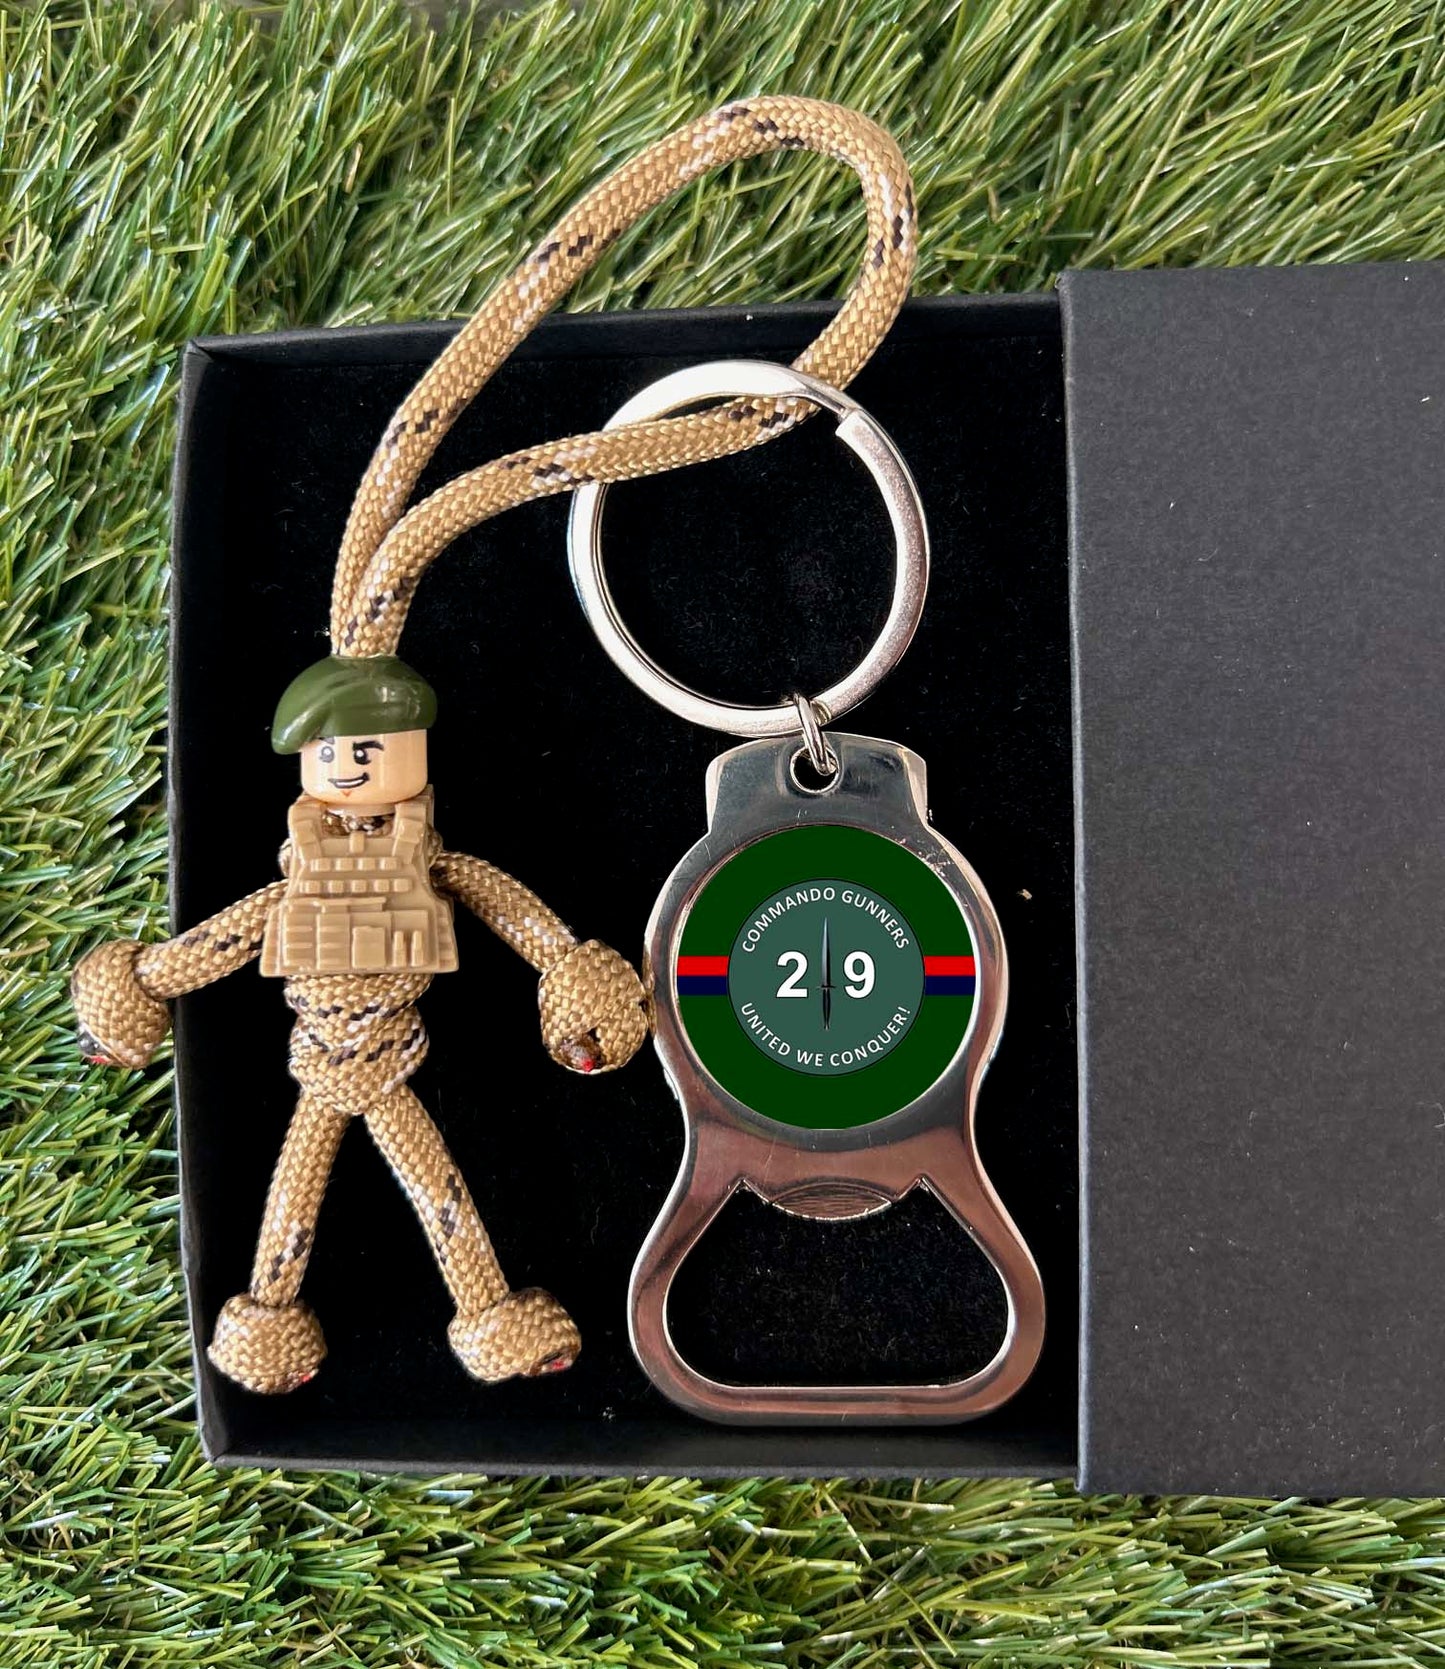 29 Commando Royal Artillery - pBuddies' Paracord Keychains and Key Ring Bottle Opener